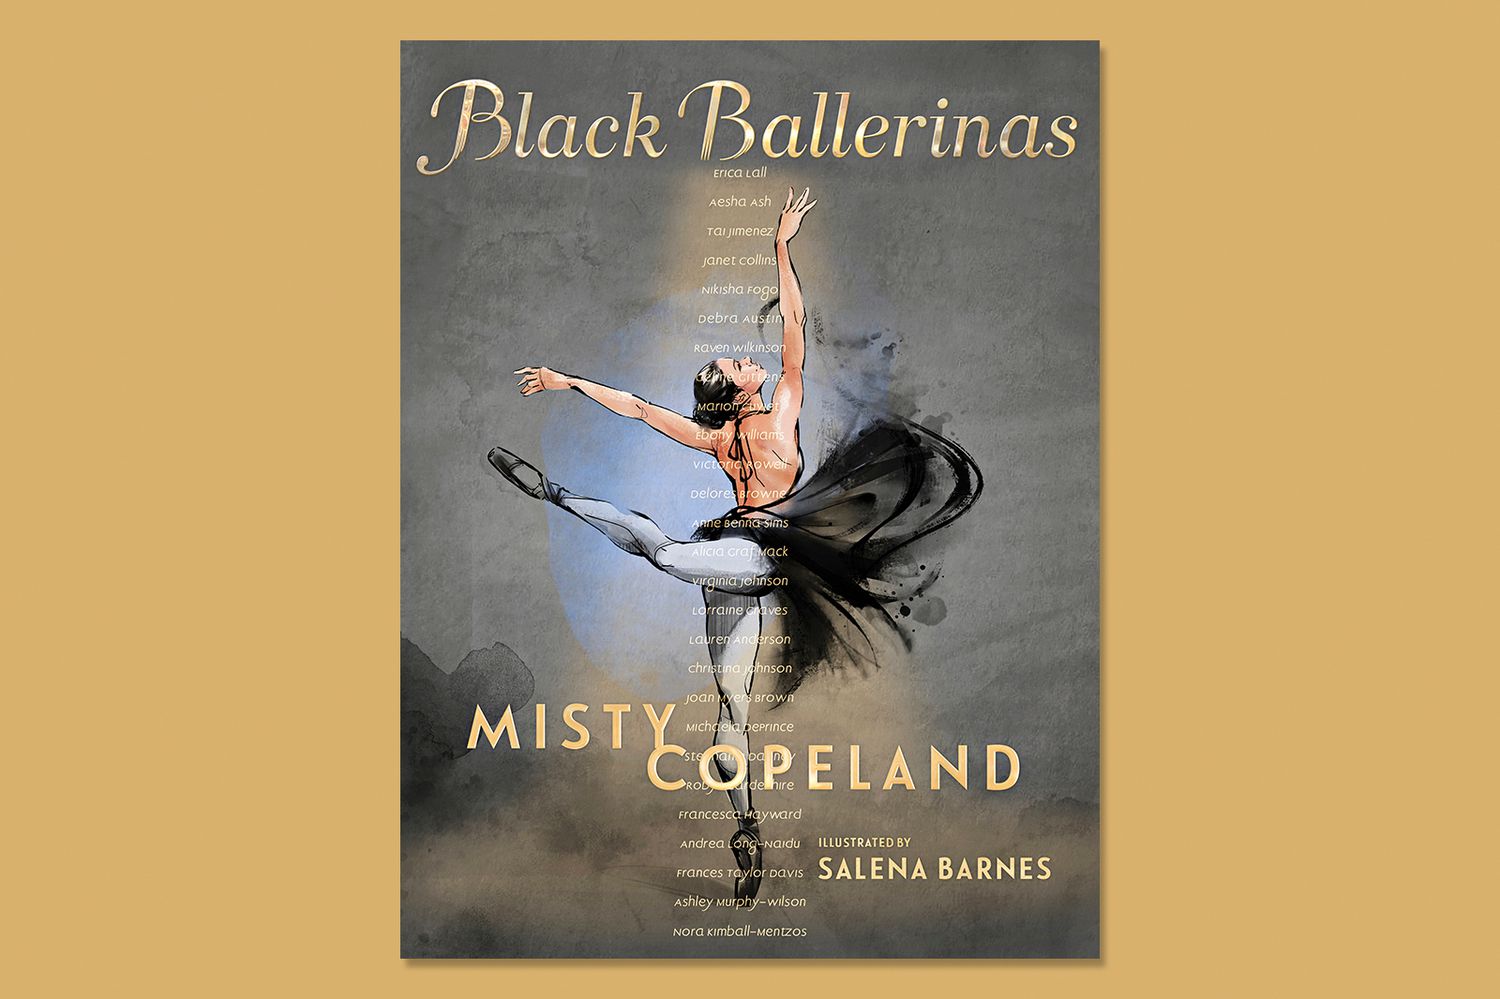 Misty Copeland’s book Black Ballerinas on solid background